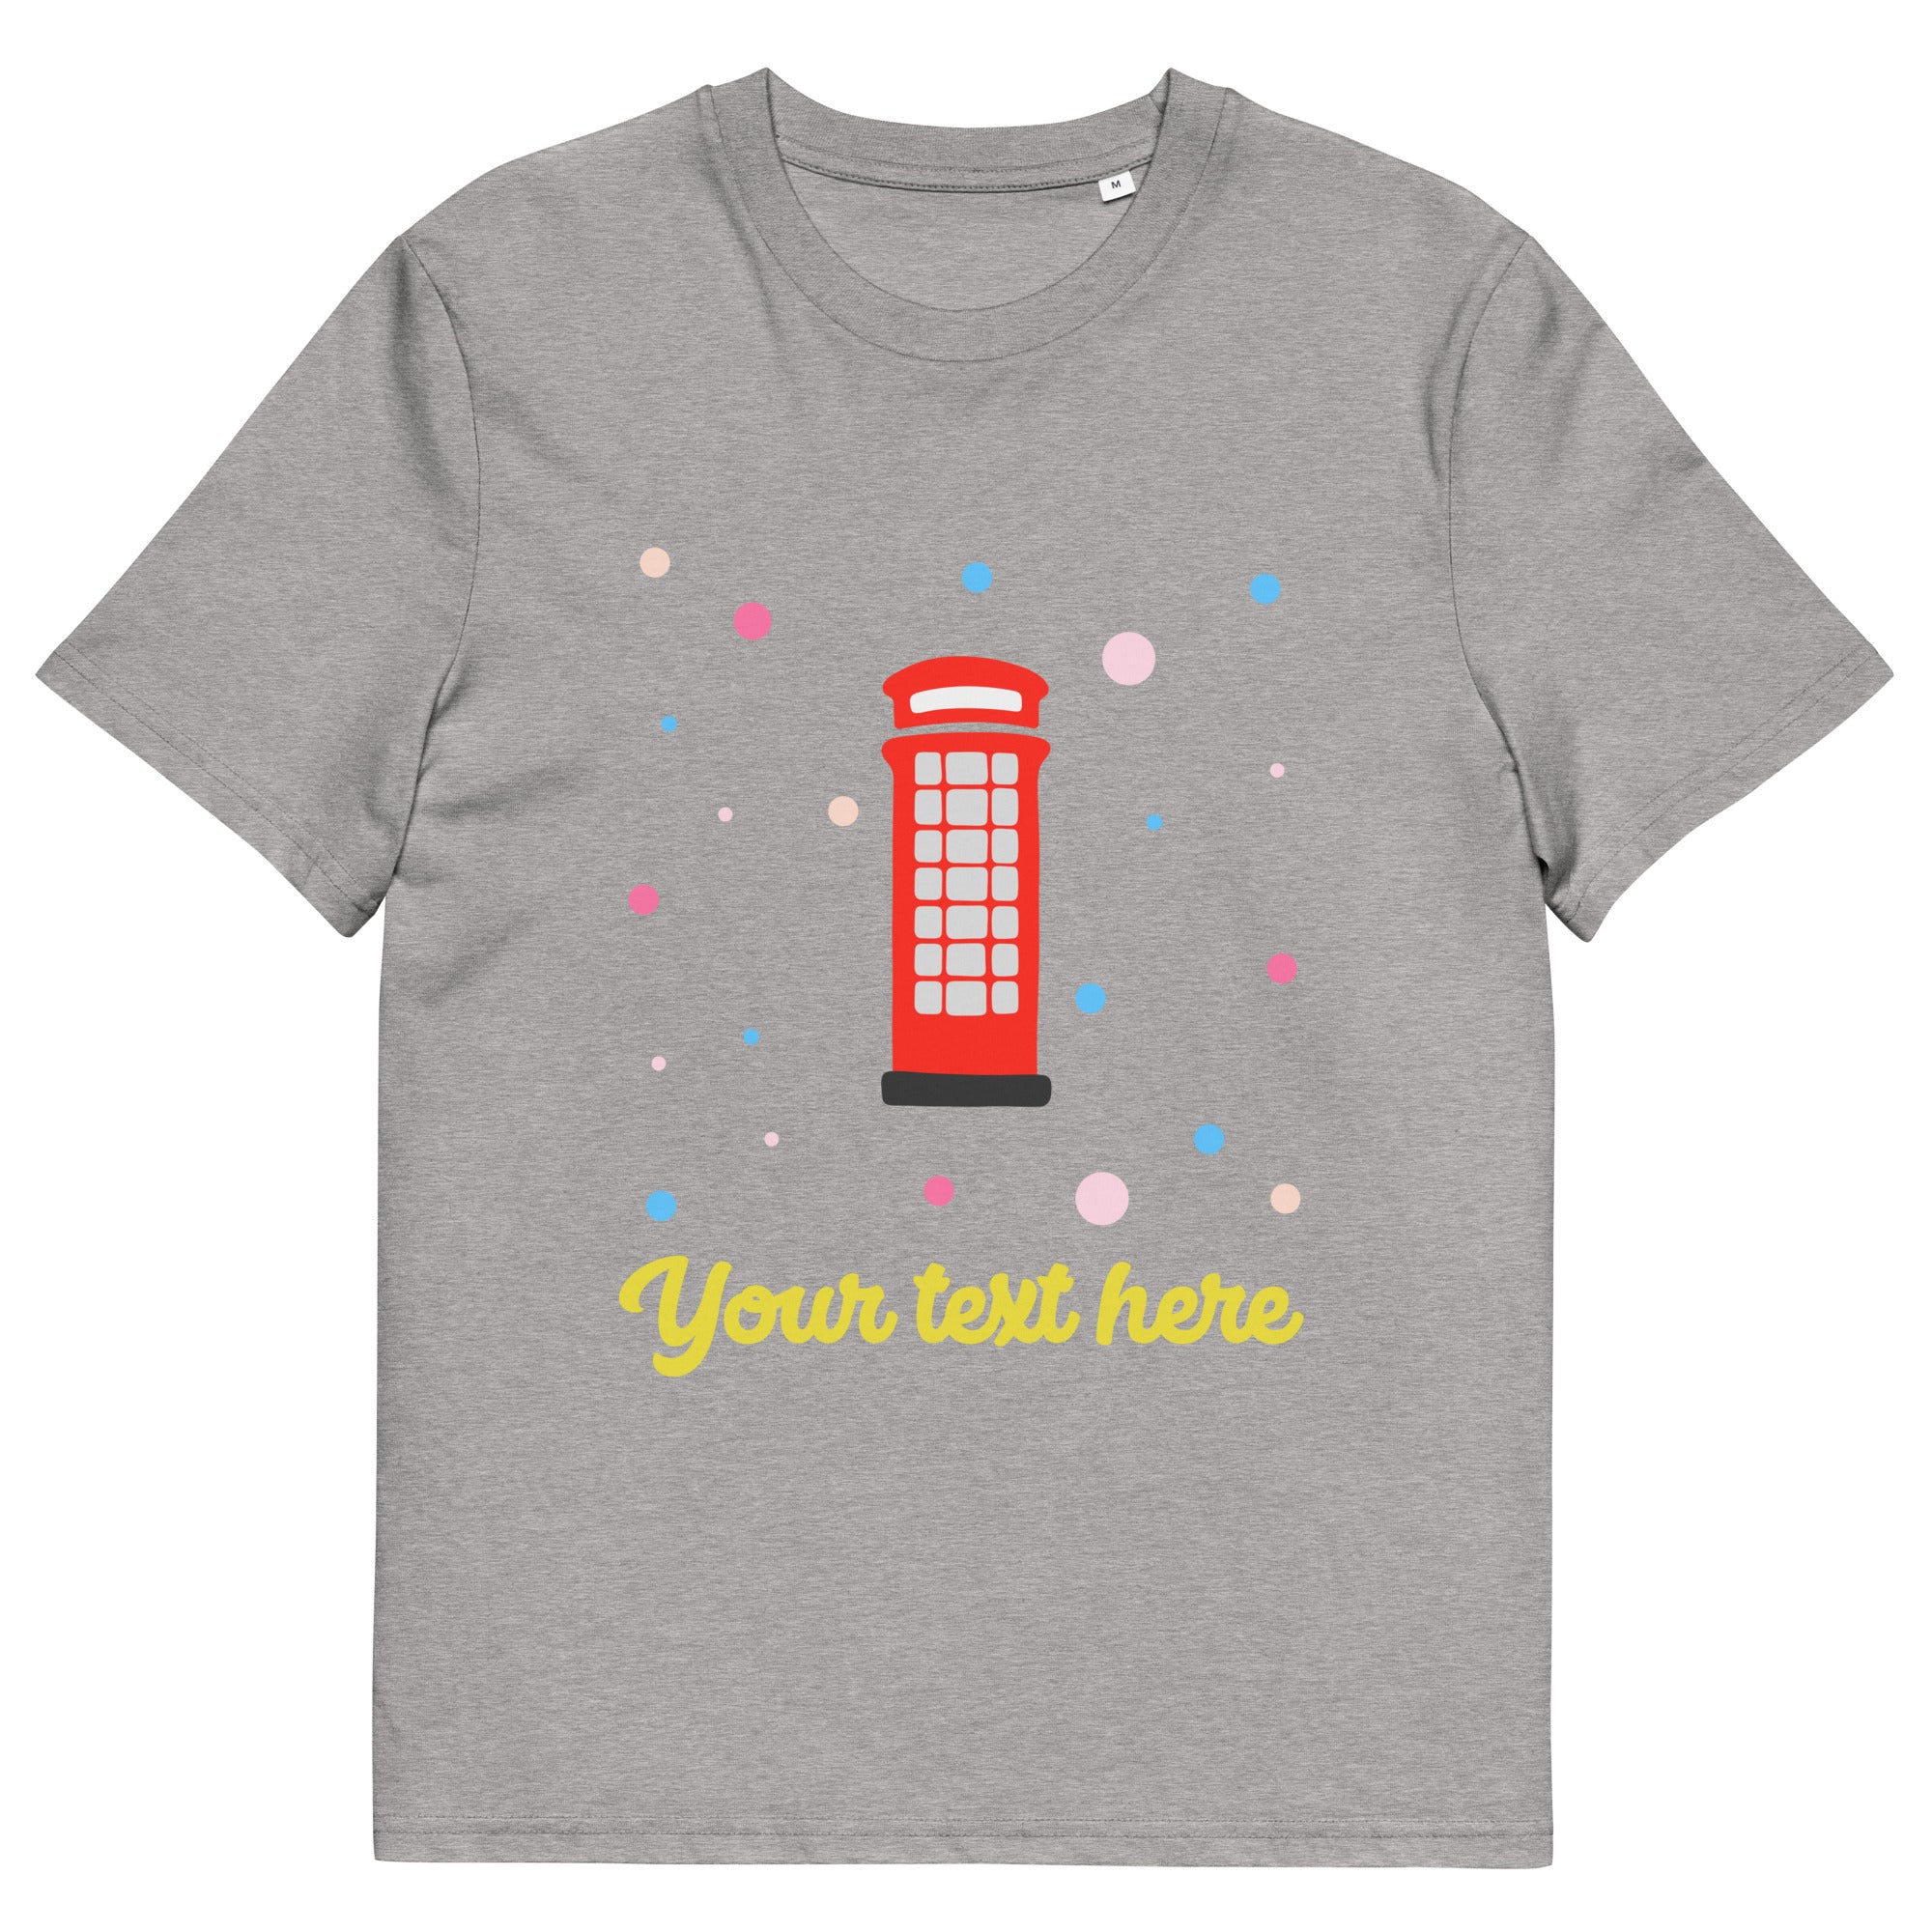 Personalised Custom Text - Organic Cotton Adults Unisex T-Shirt - London Doodles - Telephone Box - Heather Grey